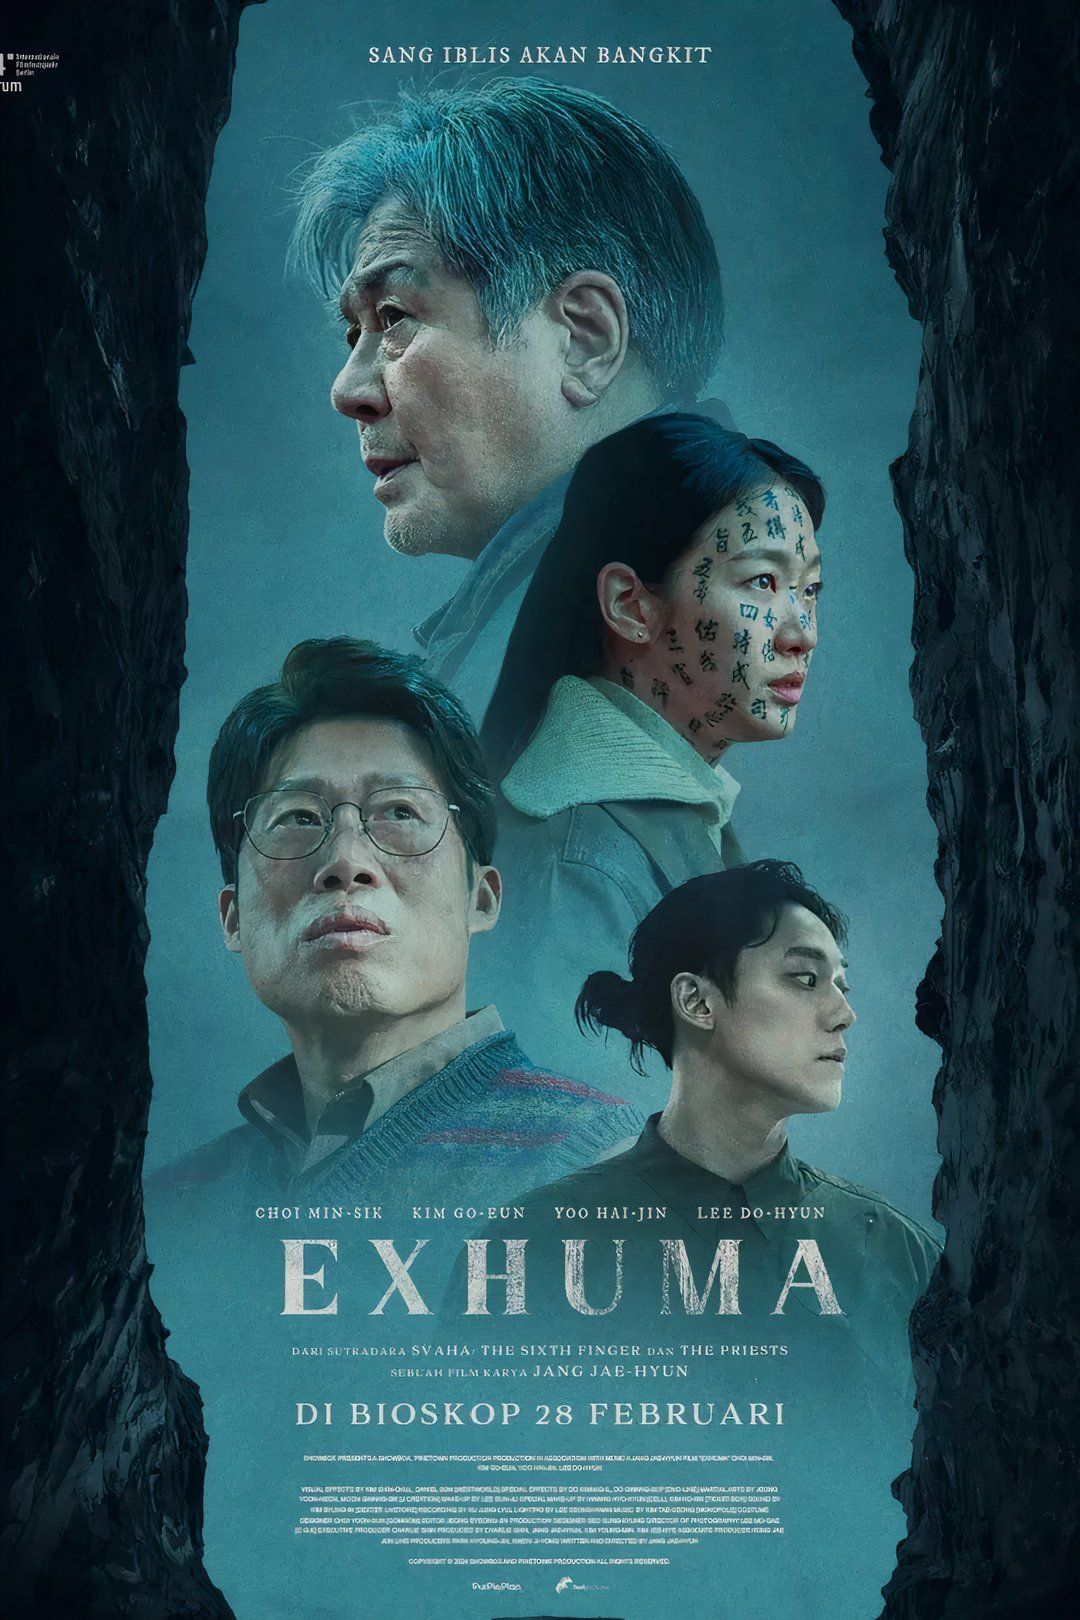 Exhuma movie poster